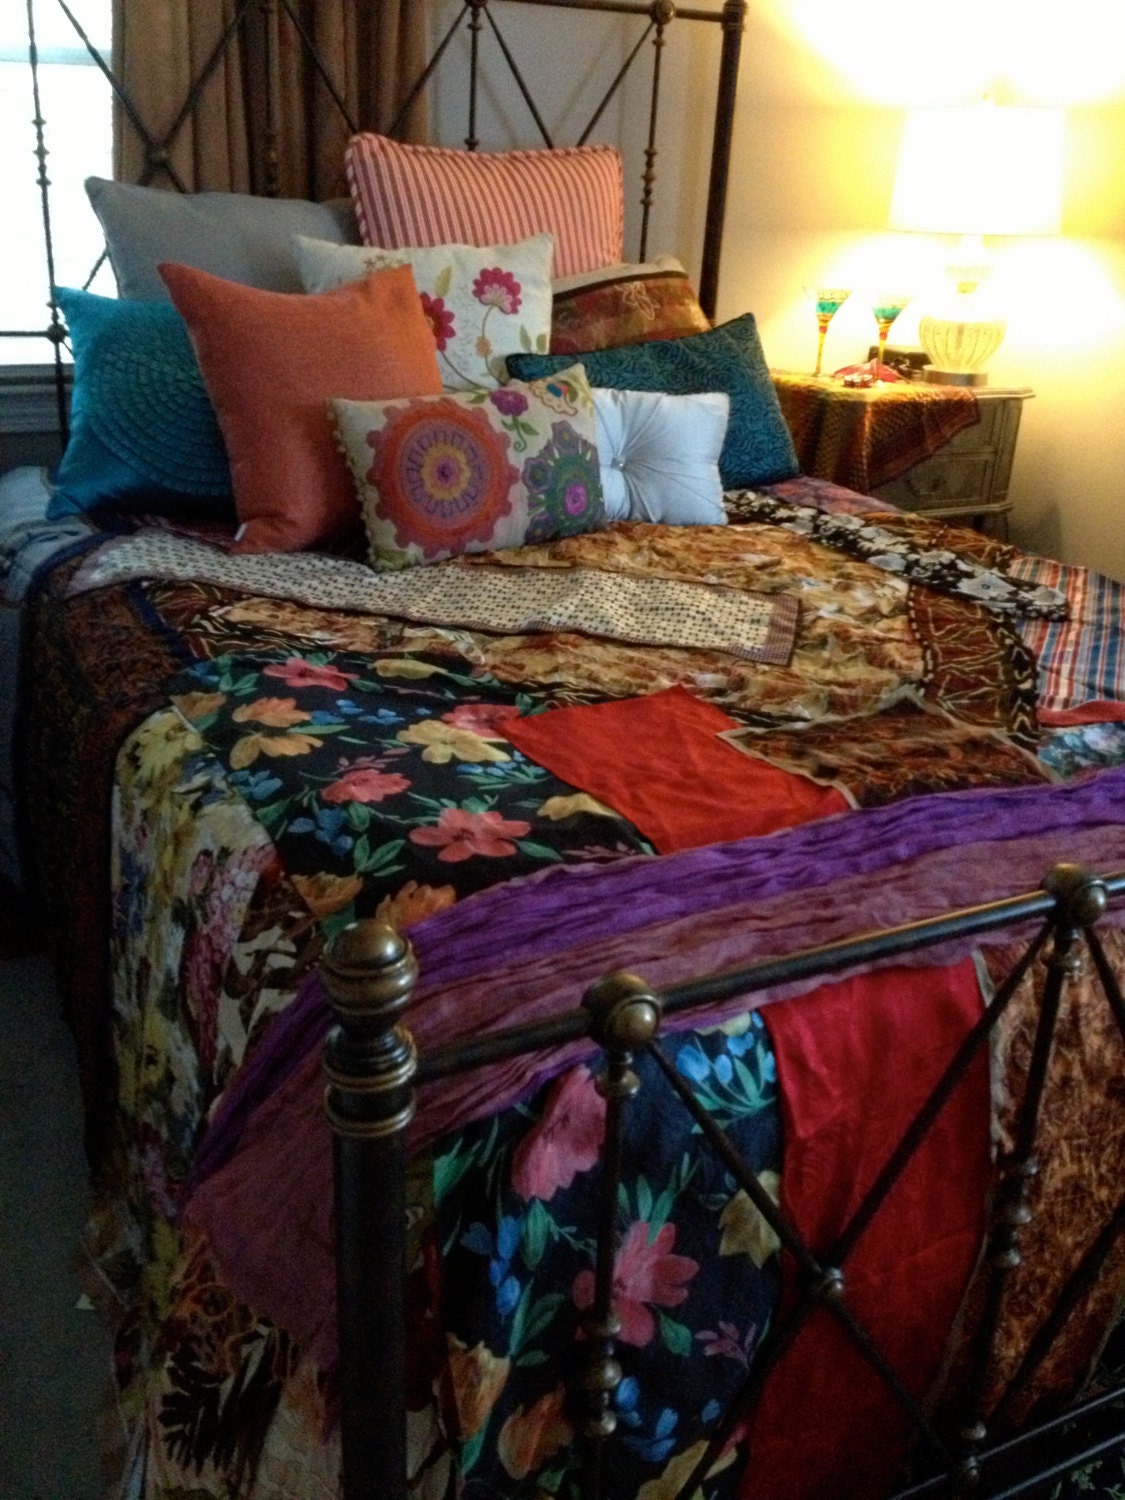 Gypsy Boho Bedspread Bedding Blanket Bohemian by ohMYcharley